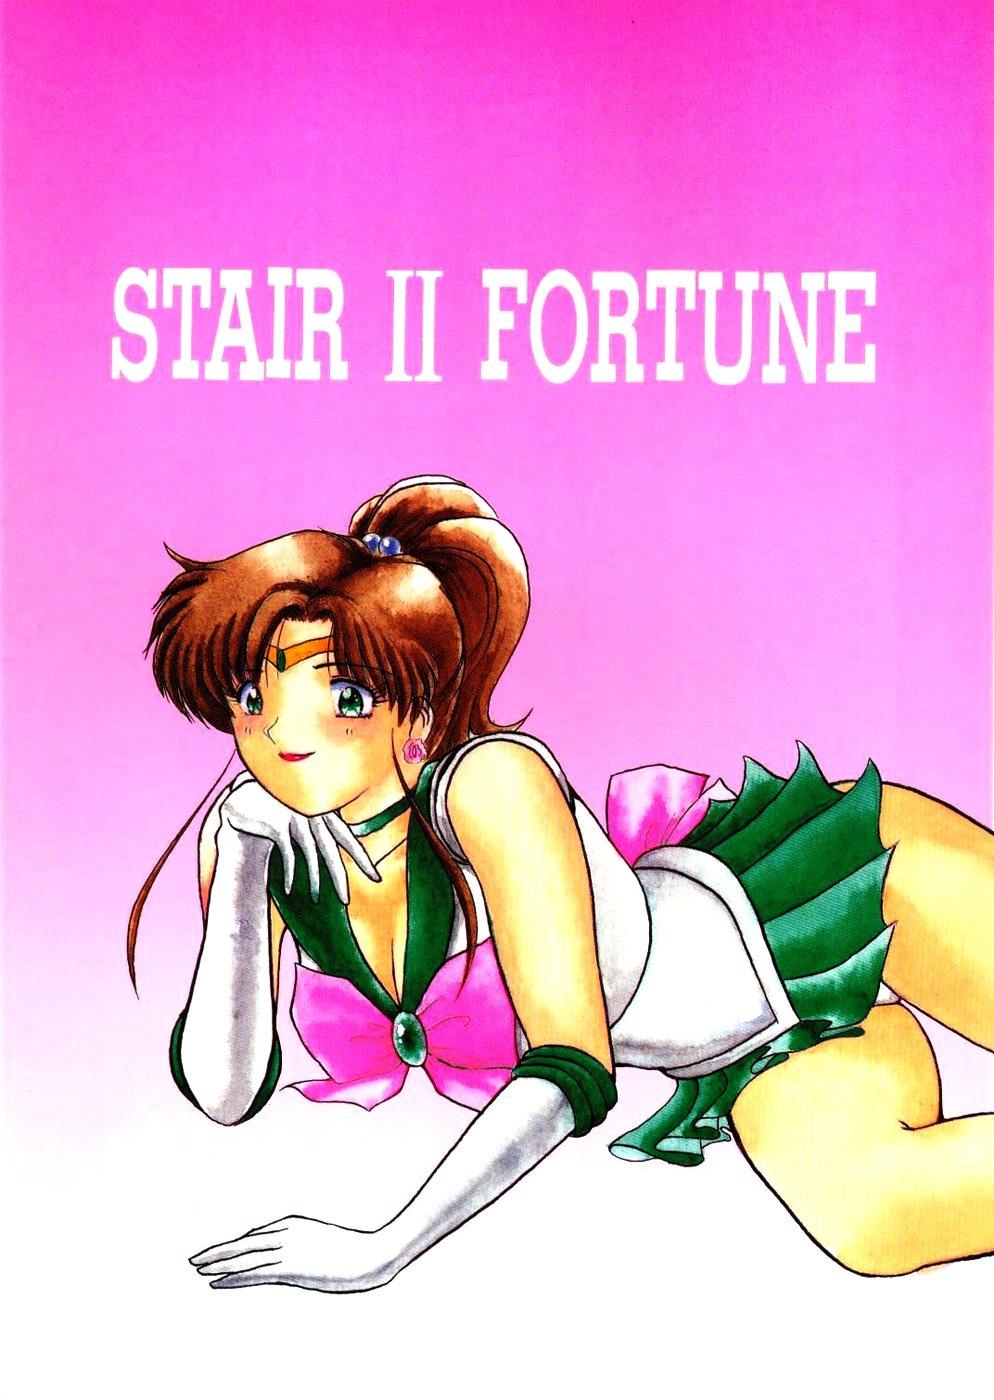 Gay Skinny STAIR II FORTUNE - Sailor moon Freaky - Picture 1